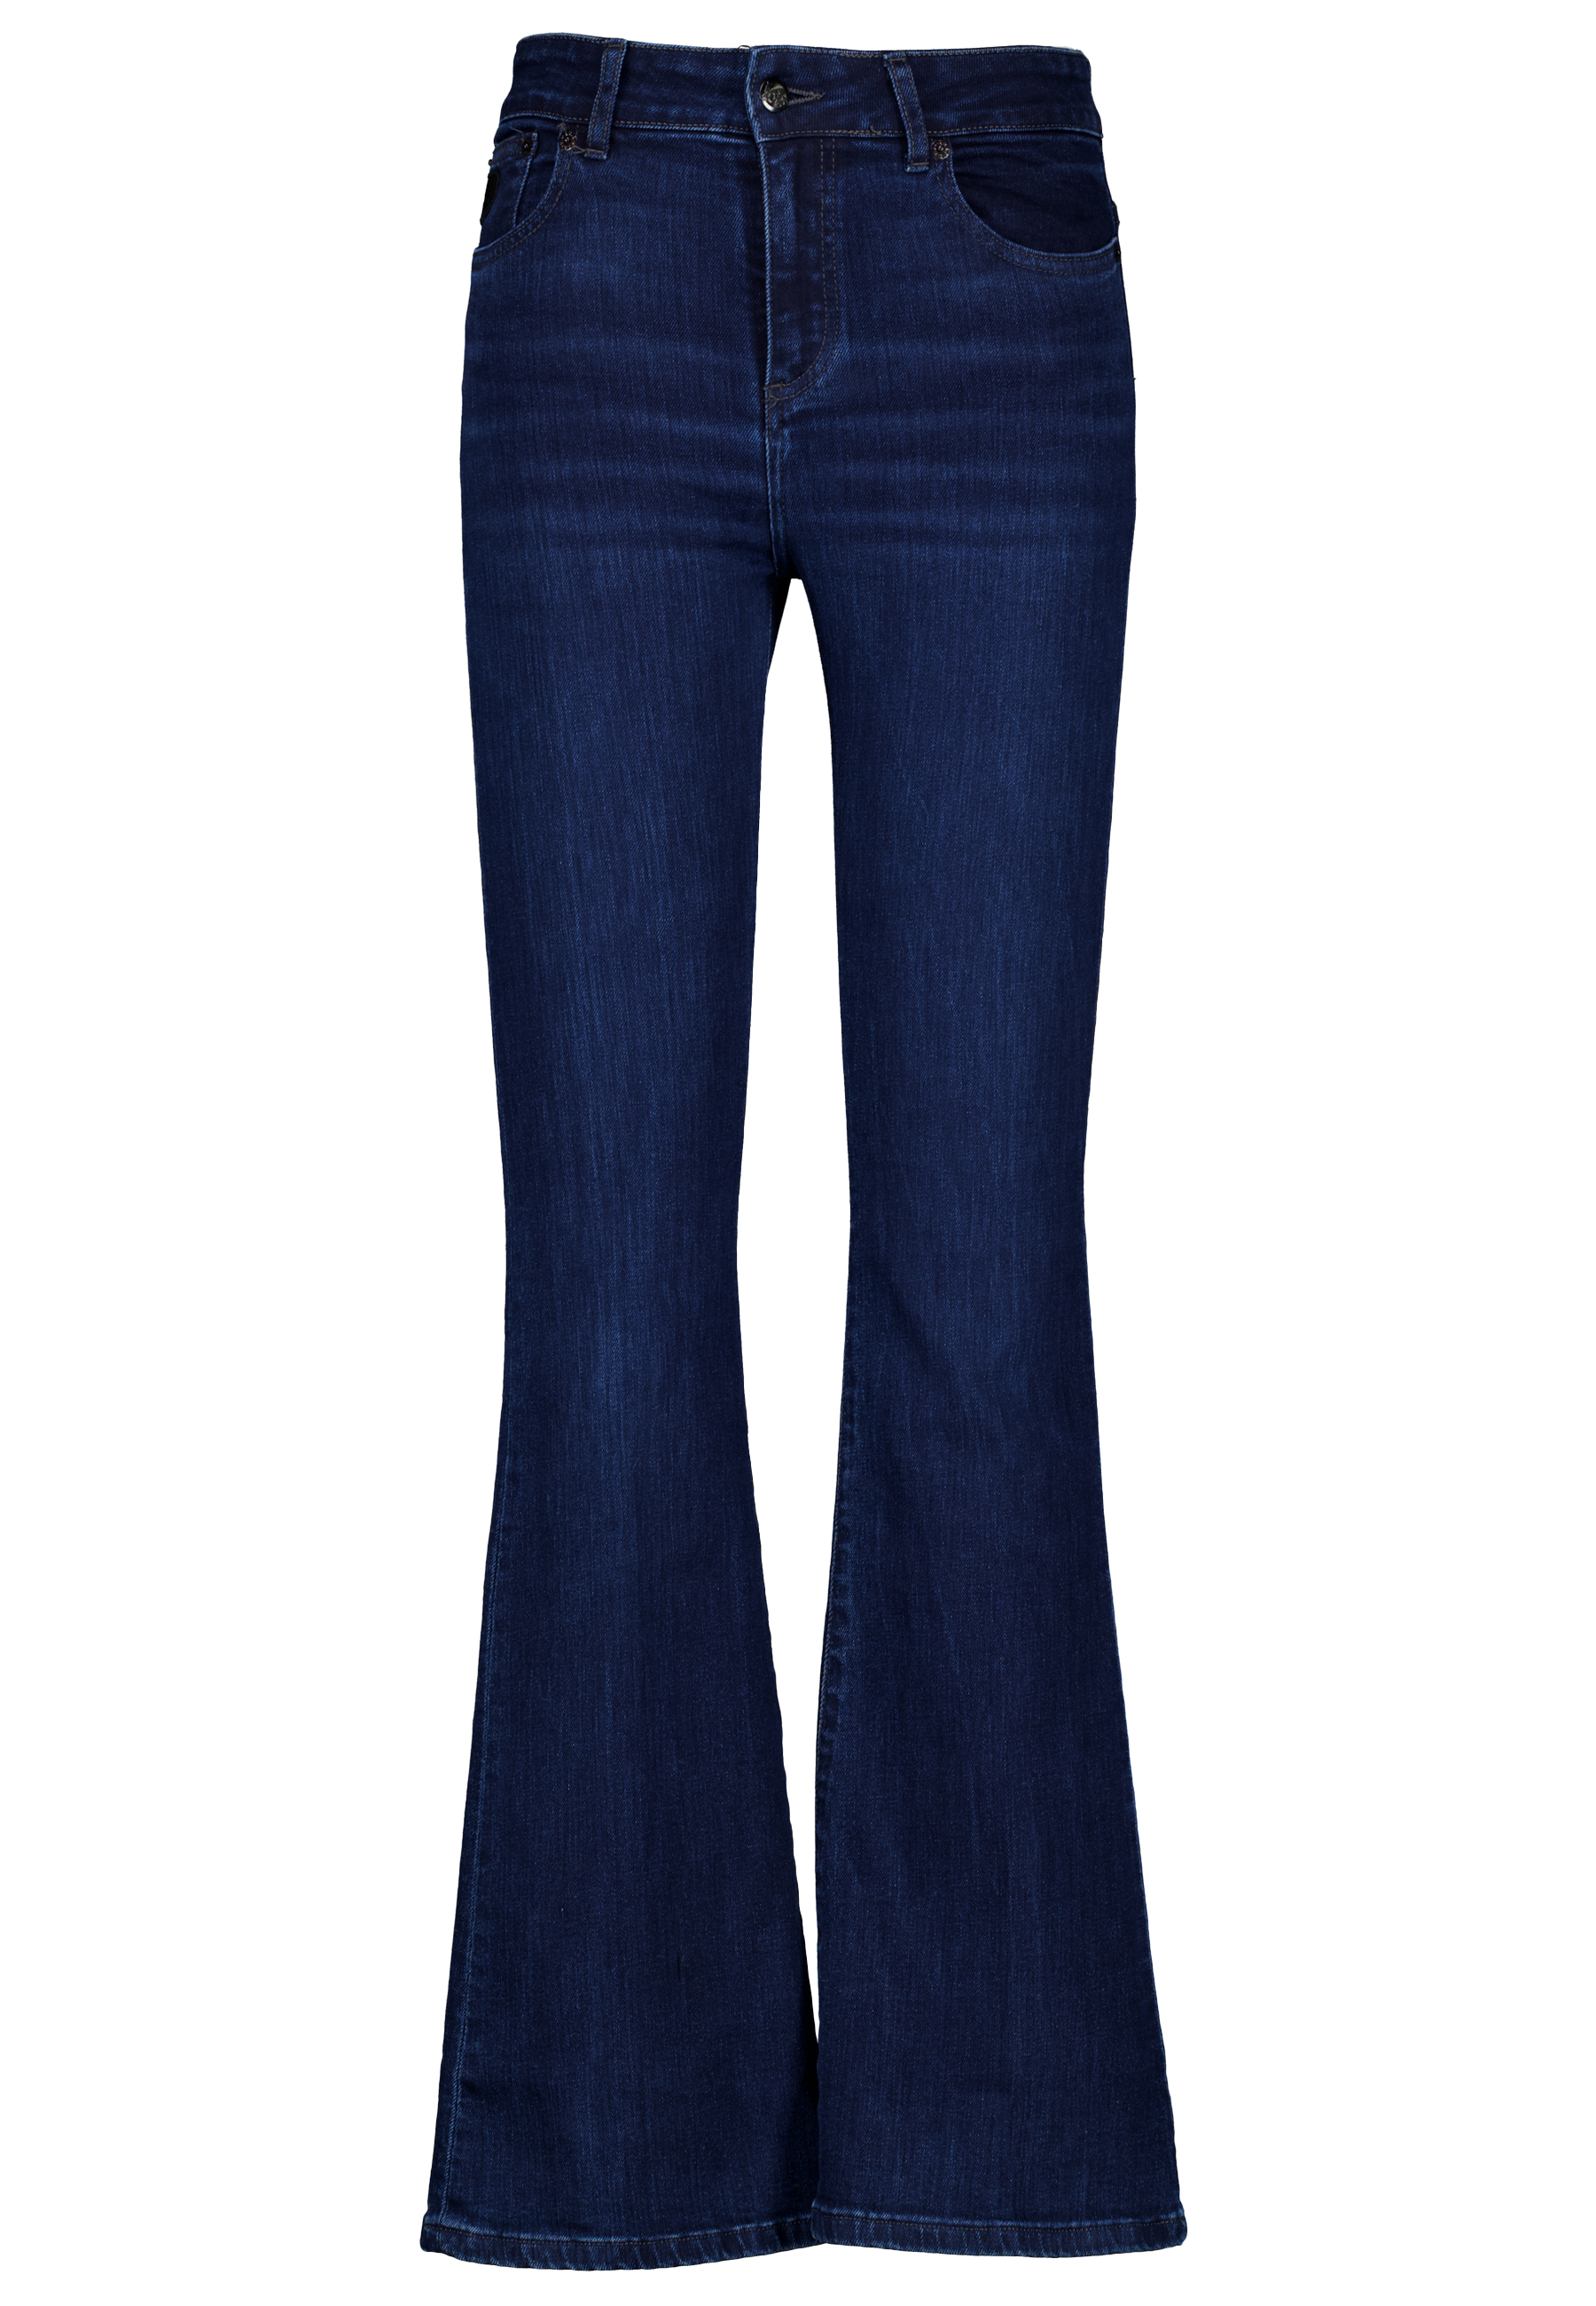 Lois jeans blauw Dames maat 30/32